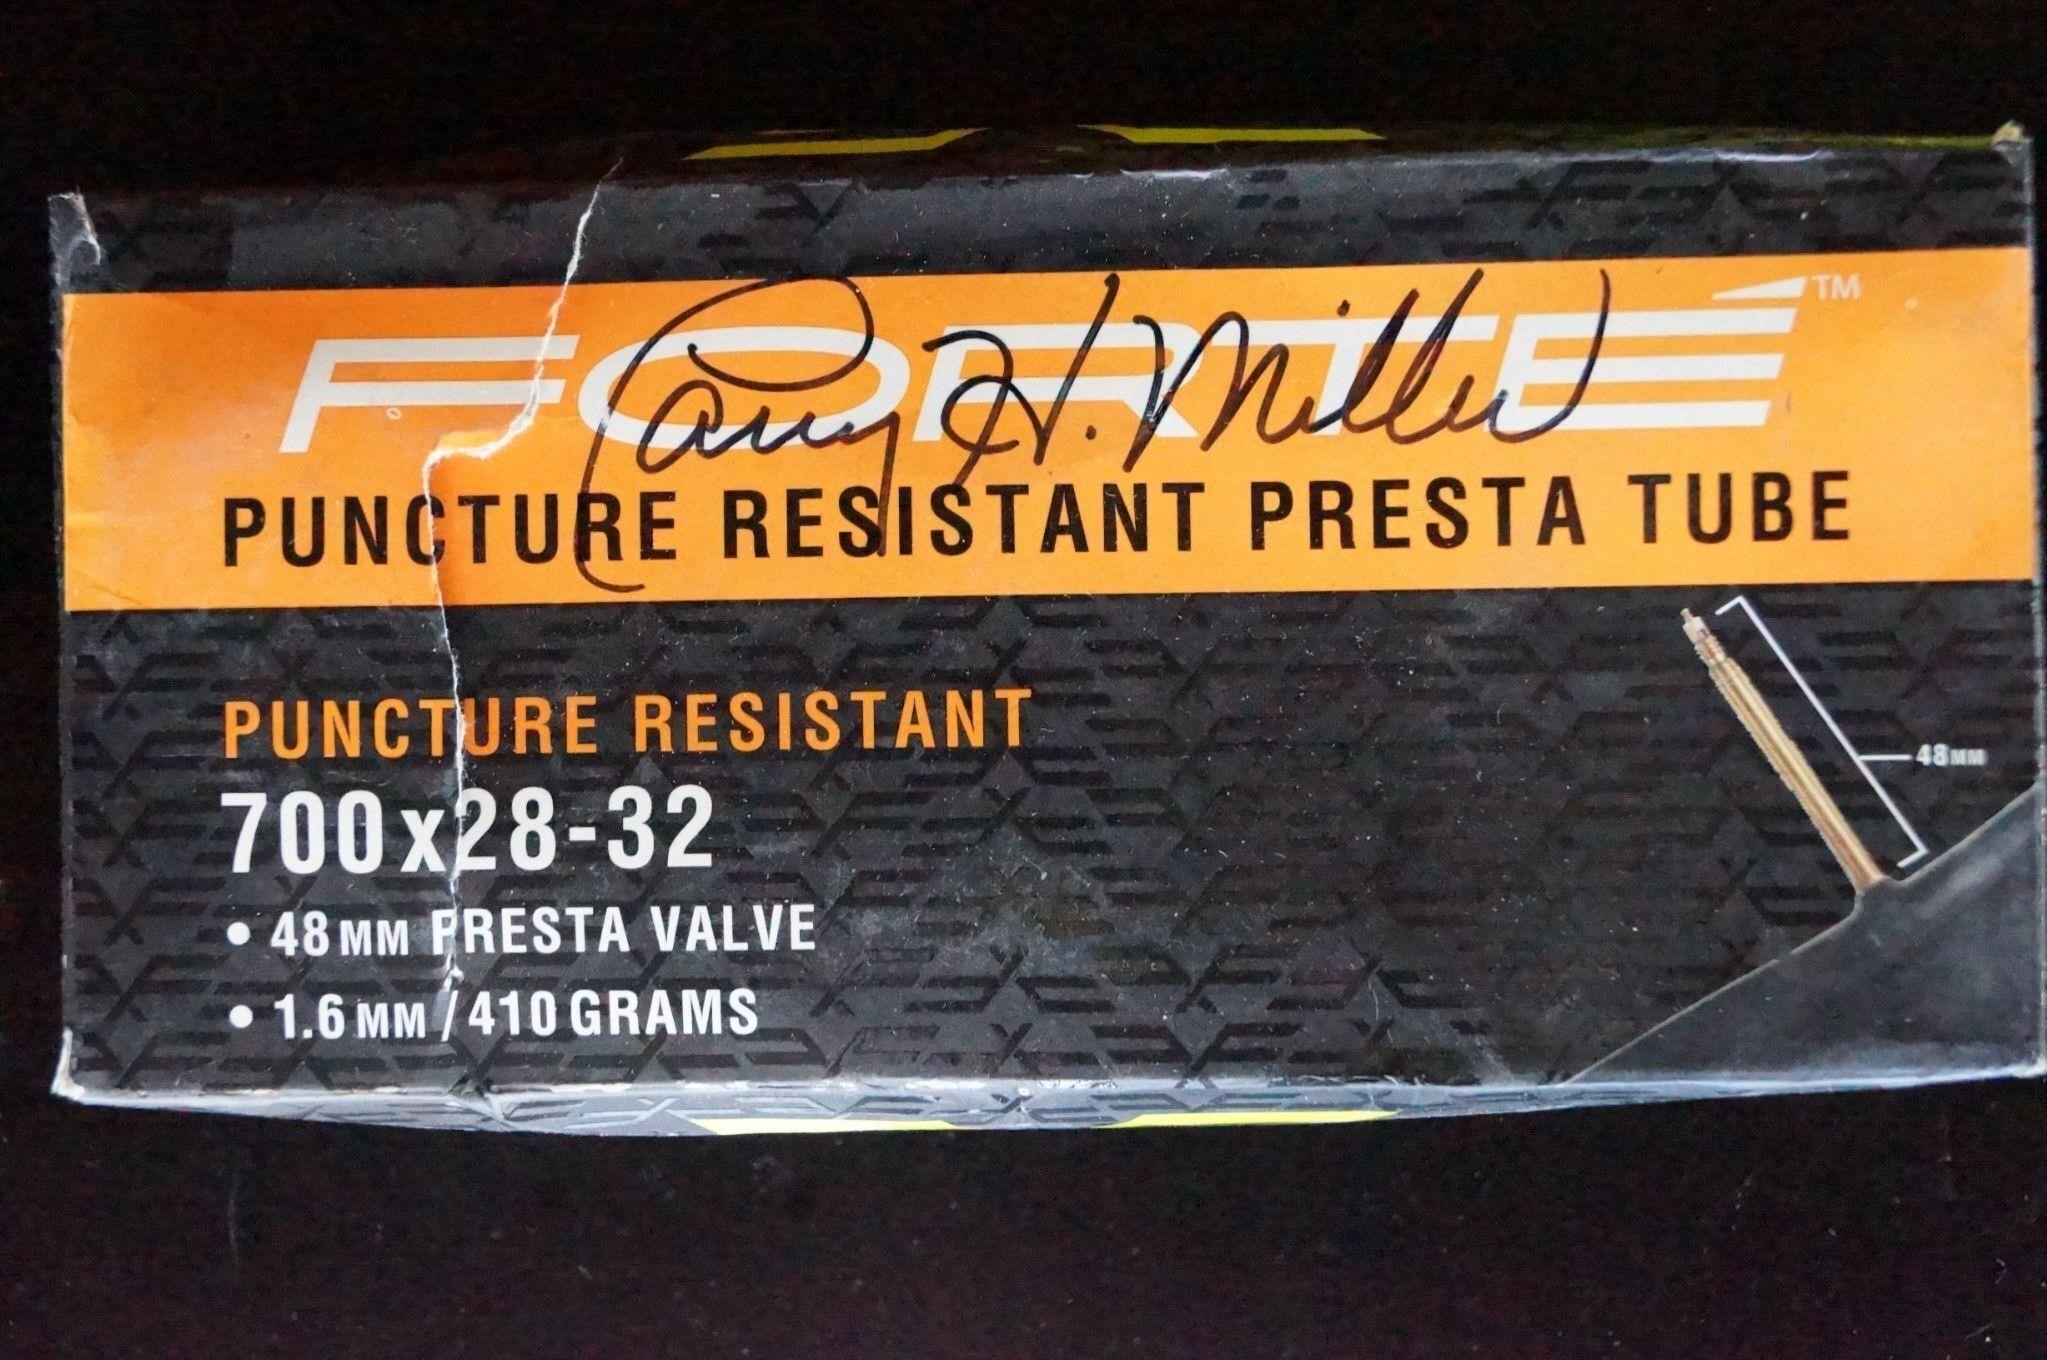 1 Puncture Resistant Presta Tube 700x28-32 (410g)